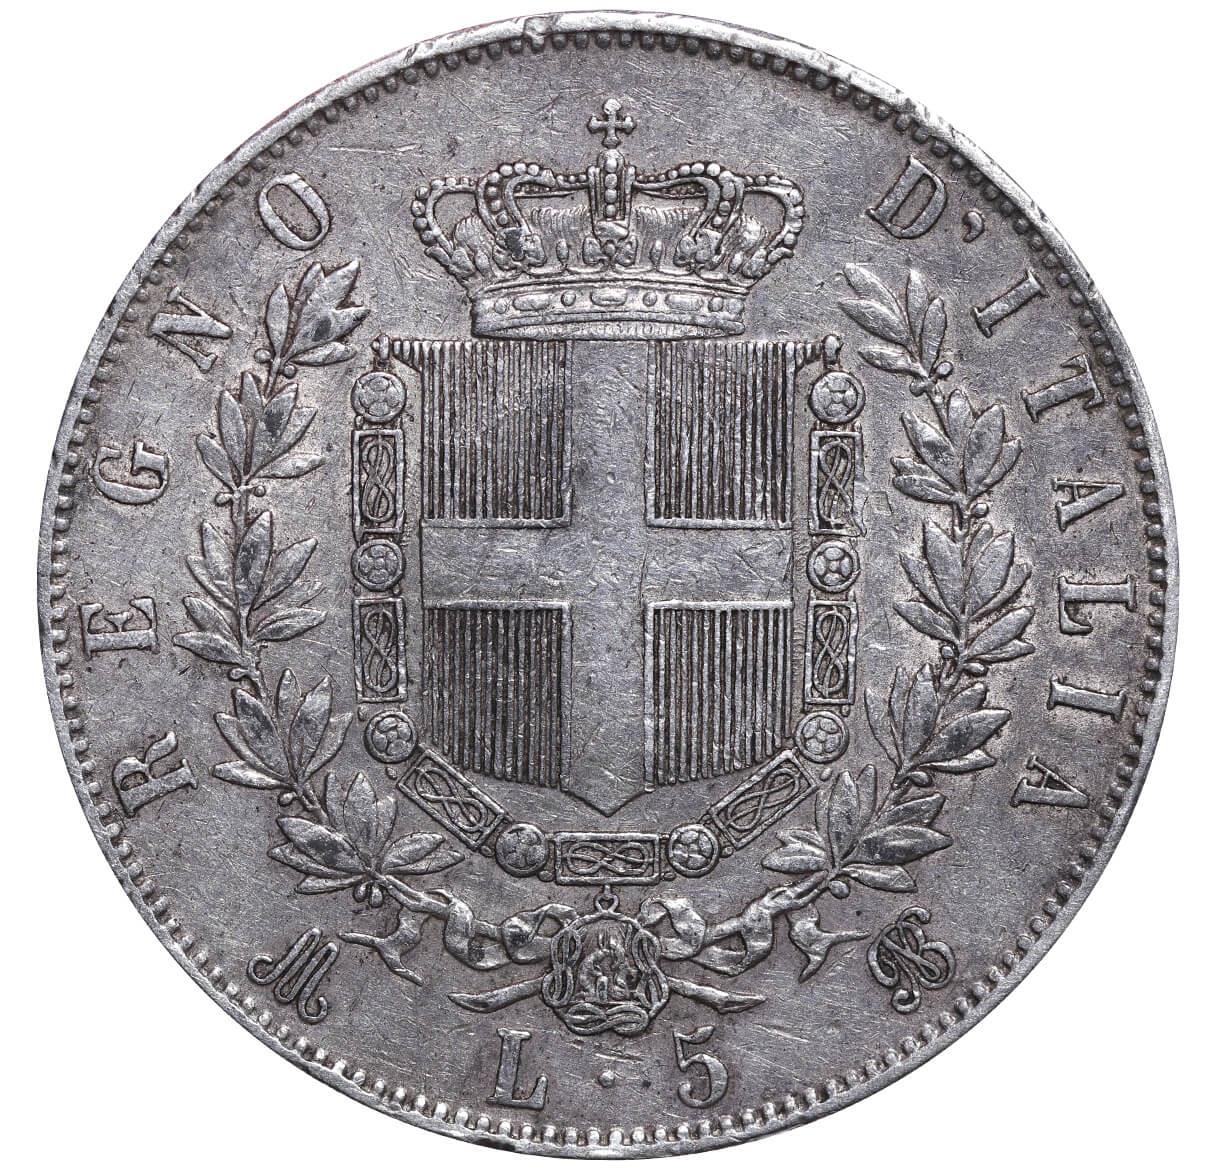 Italy, 5 Lire, 1872 year, M-B - Image 3 of 3